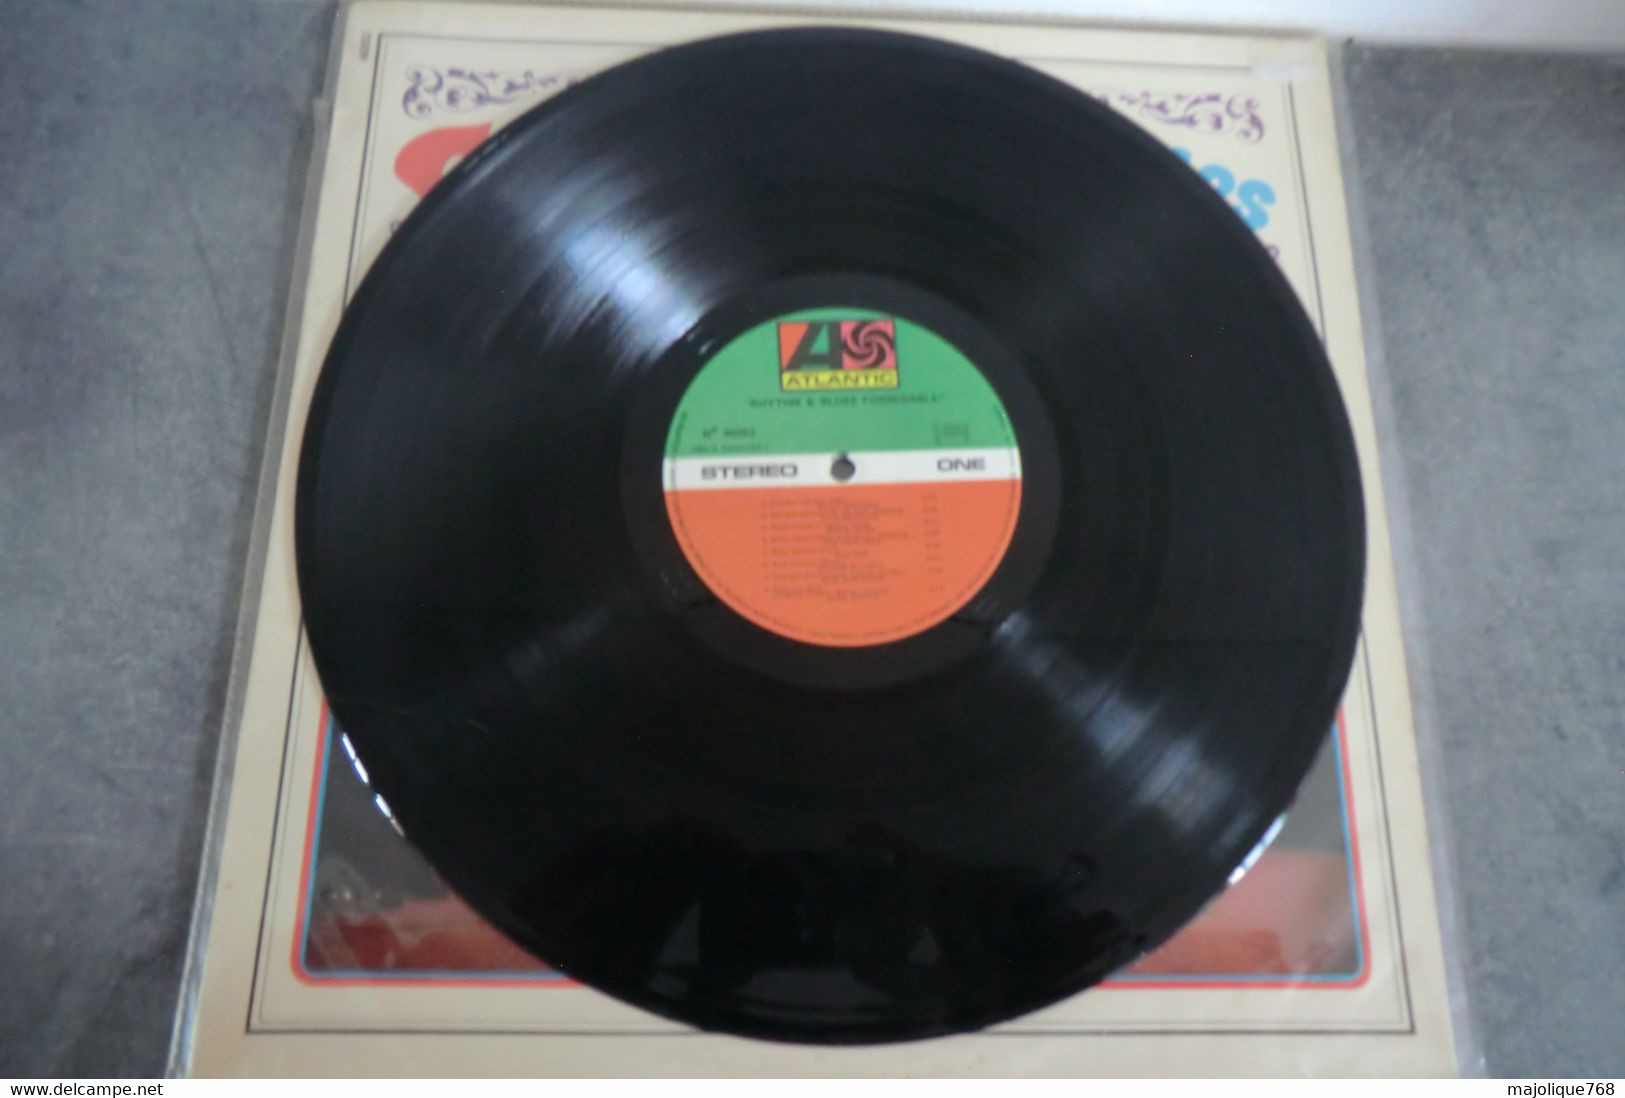 Disque The Formidable Rhytm And Blues Vol1 - Atlantic 40252 - France 1972 - - Soul - R&B